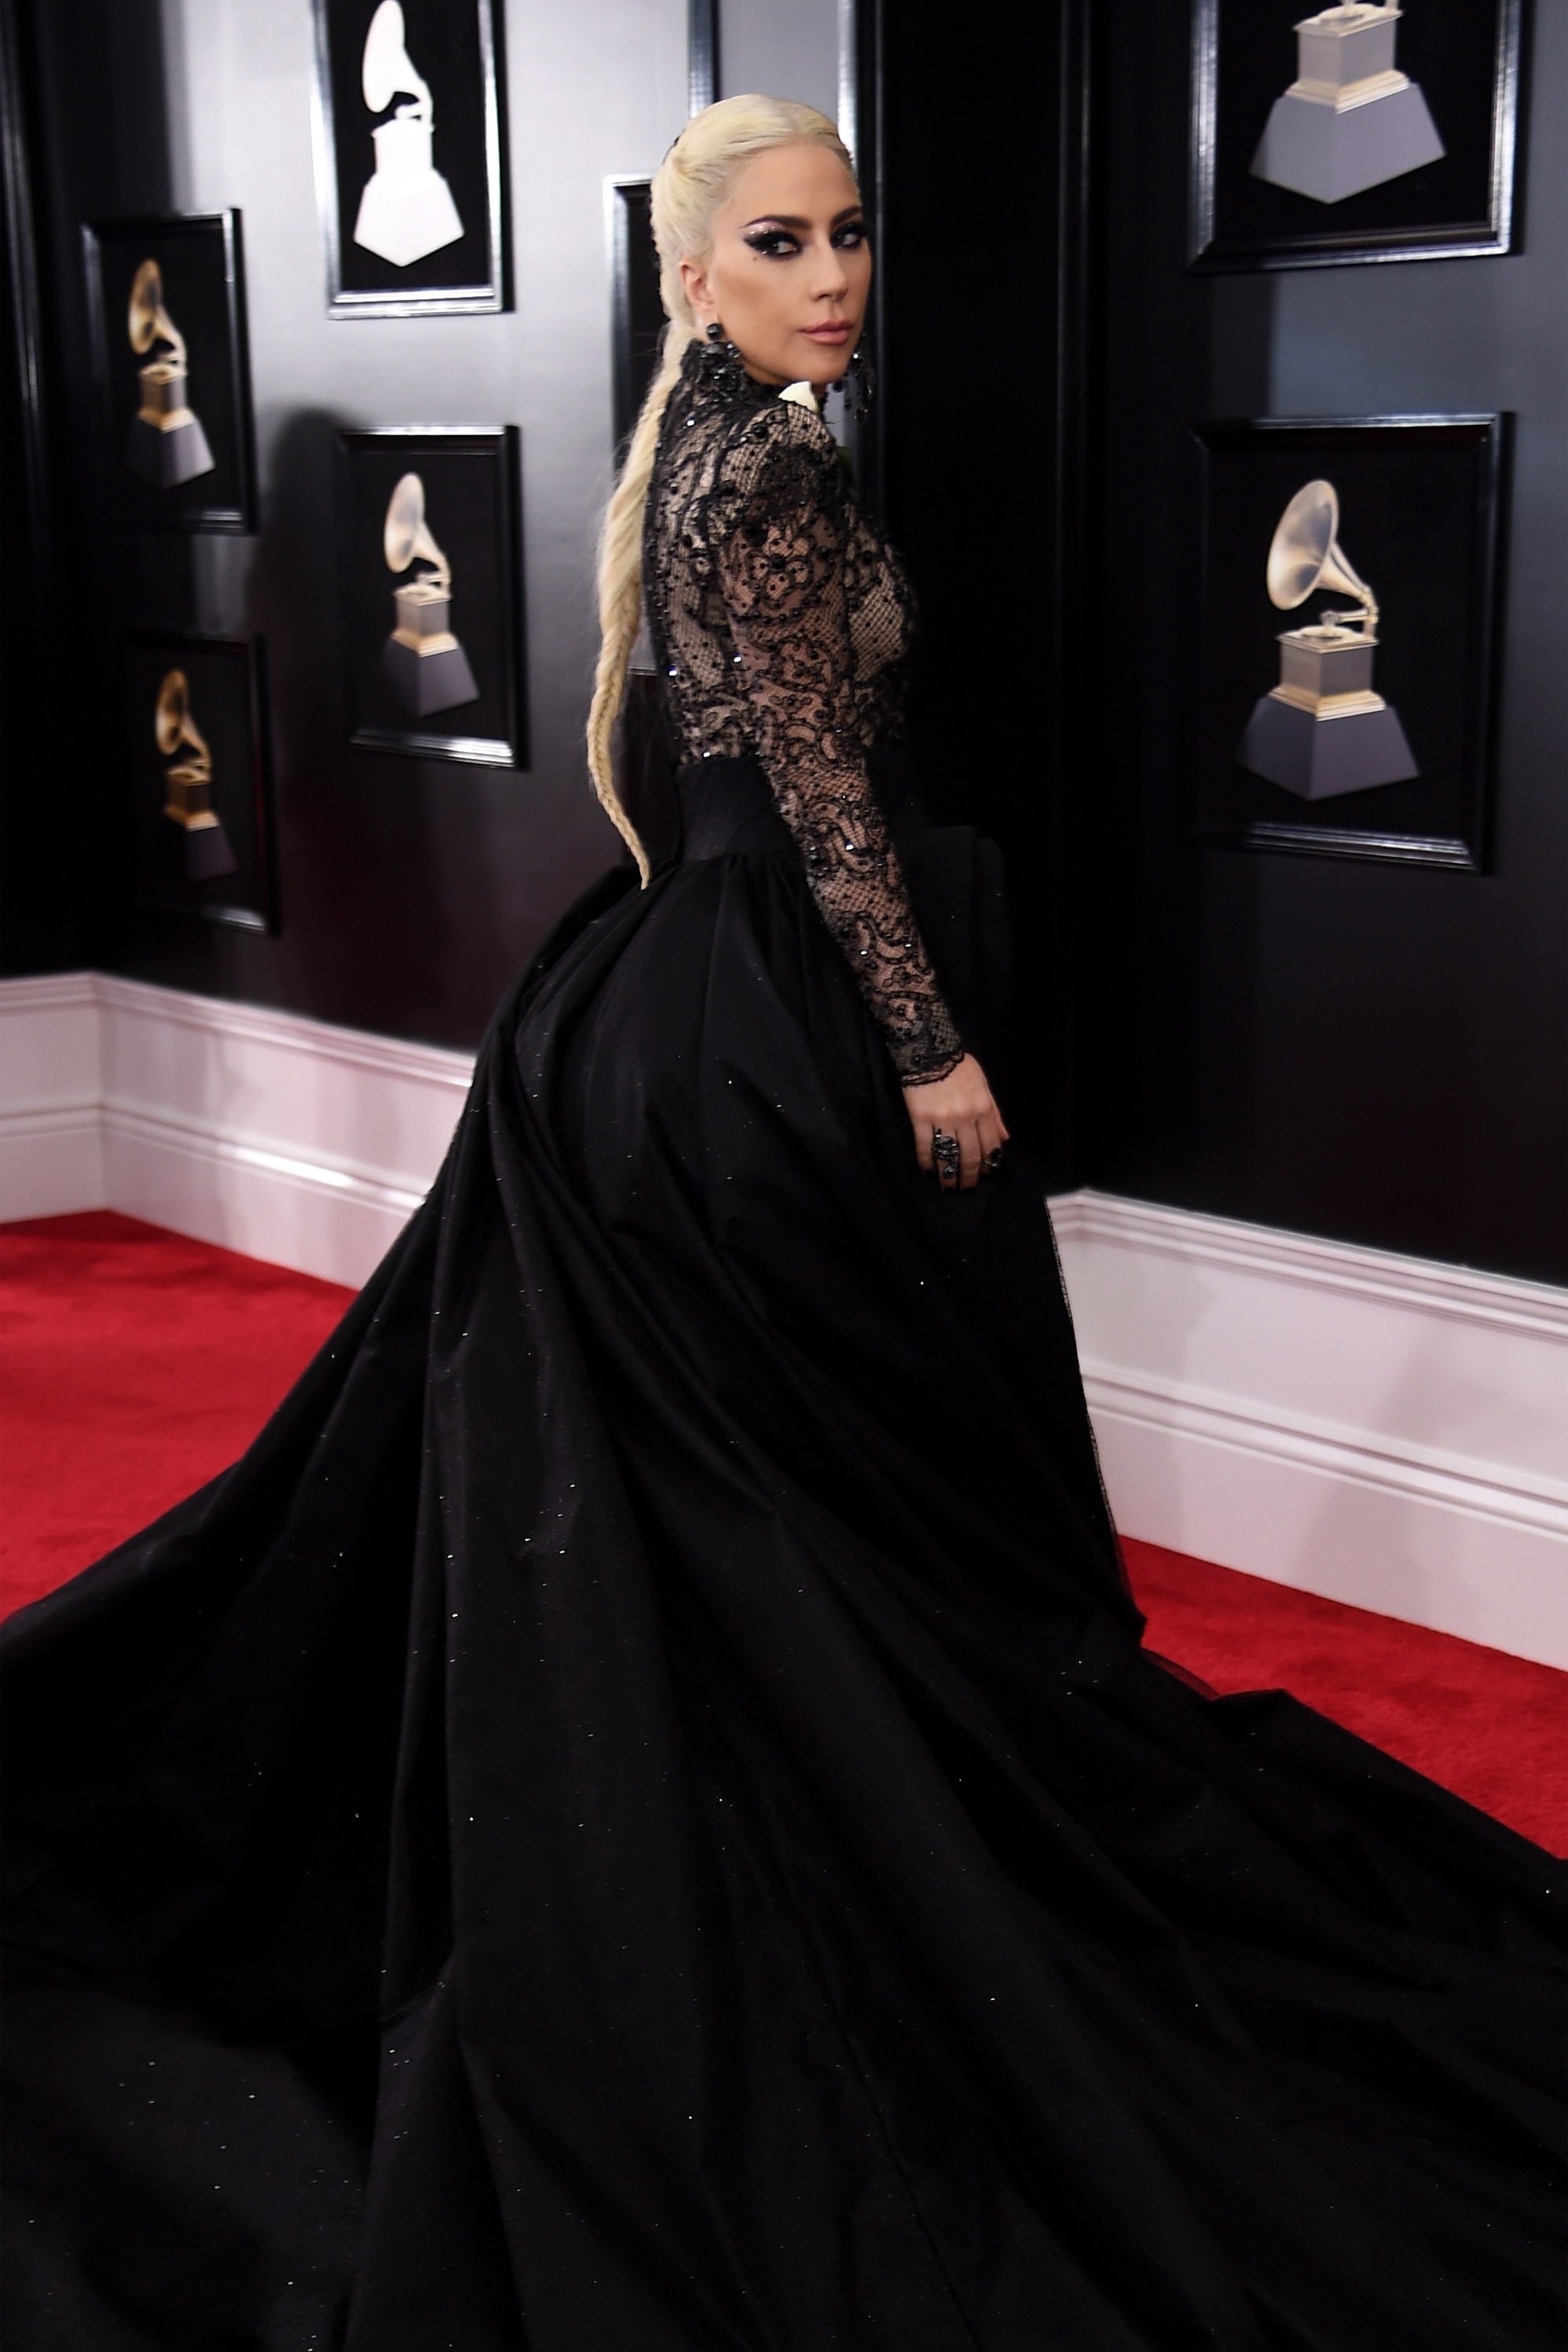 Grammys 2018 Best Red Carpet Looks Fashion Gowns Cardi B SZA Pink Lady Gaga Lana Del Rey Alessia Cara